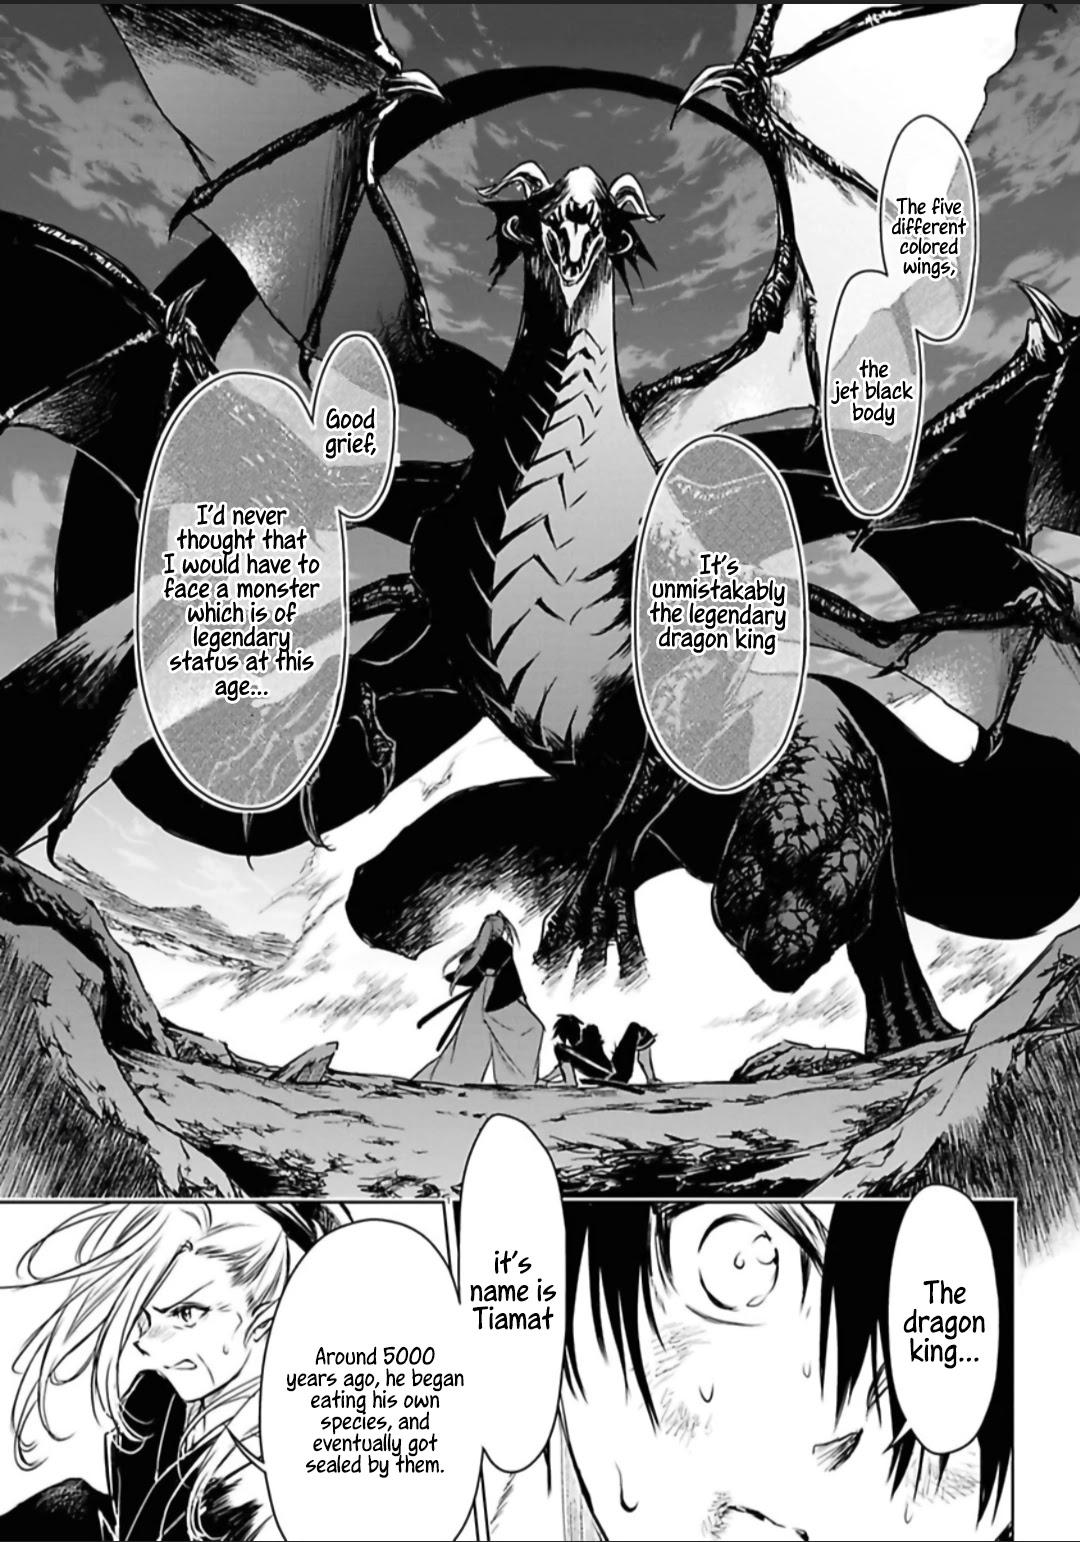 Ori Of The Dragon Chain Ori of the Dragon Chain - Ch.7 Page 20 - Mangago